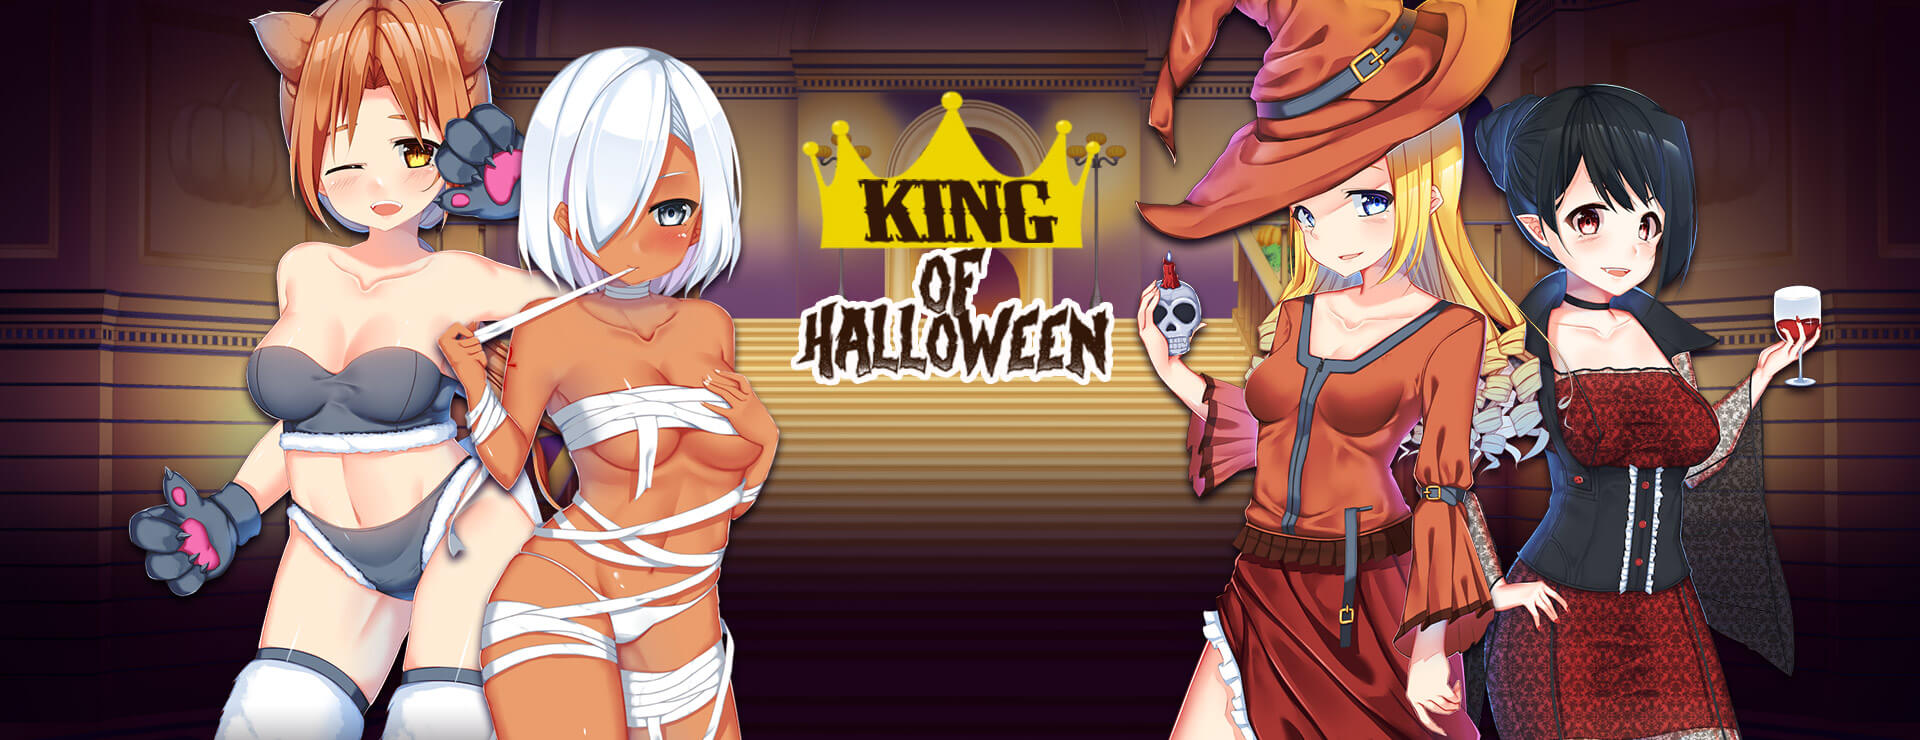 King of Halloween - ビジュアルノベル ゲーム